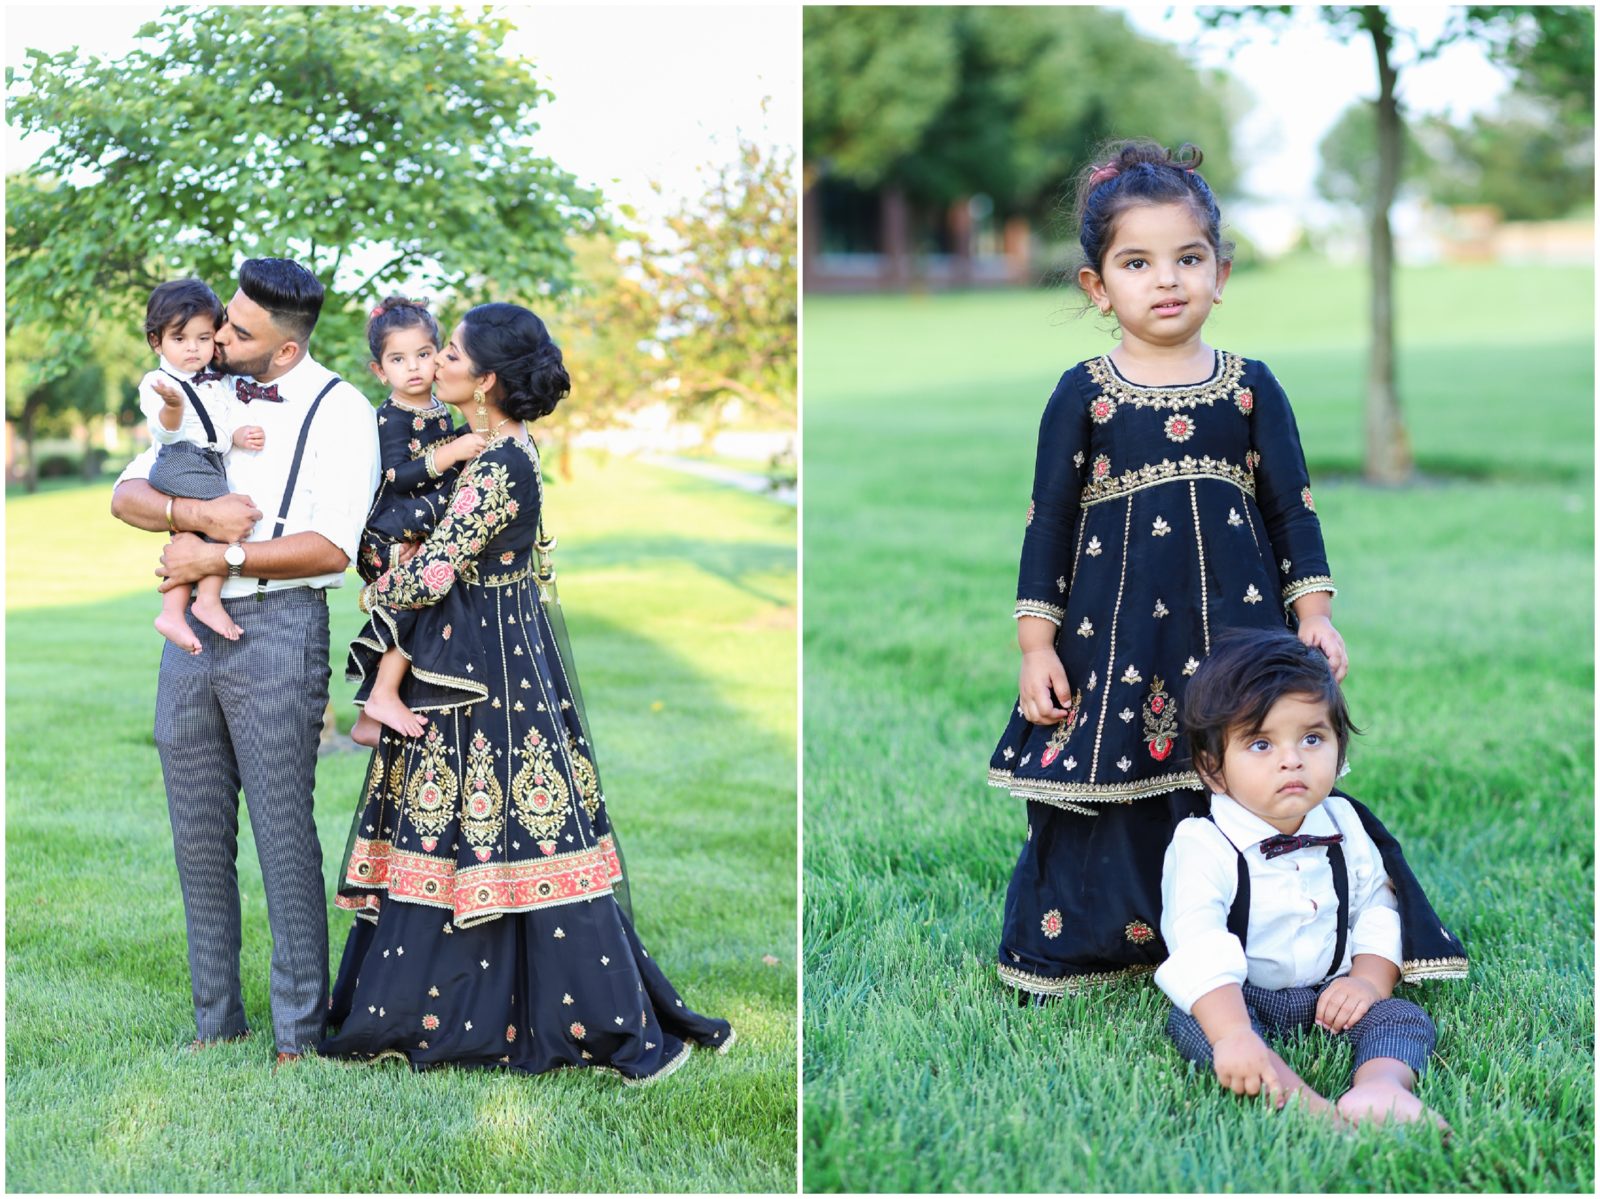 Kansas City Family Portrait Photographer - Overland Park Olathe Leawood - Adorable Family Portraits Outdoor - Indian Family Portraits Wedding Photographer